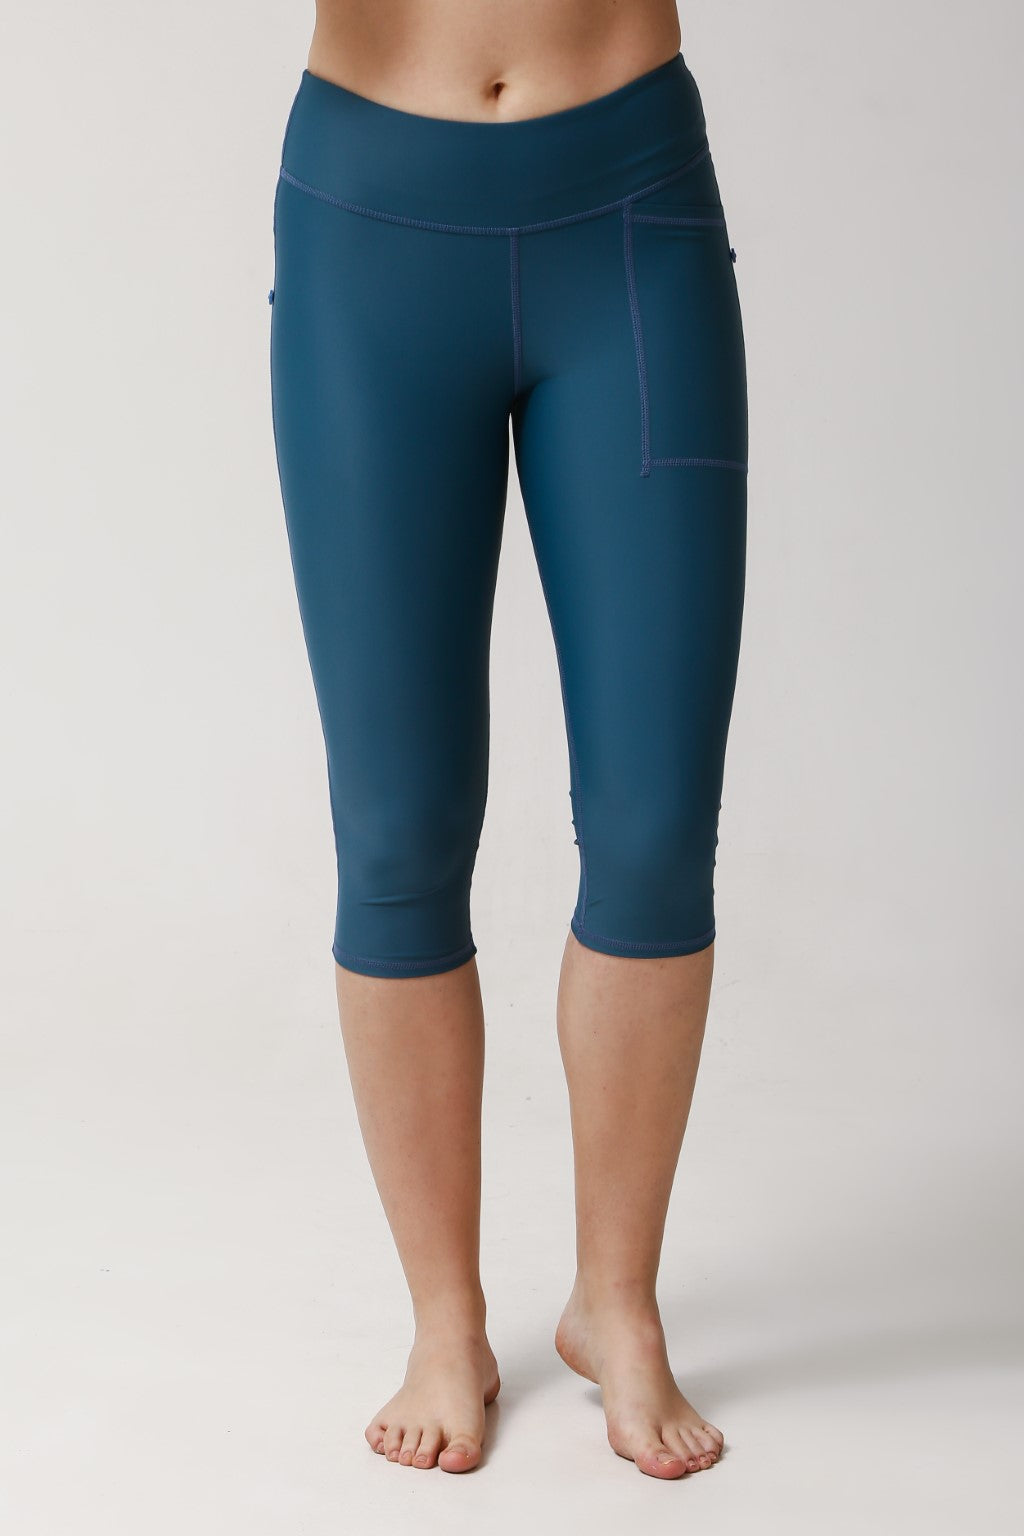 Lanuuk Capri Swim Tights - Wave | Cropped Shorts Swimming Leggings Modest Swimwear Burkini